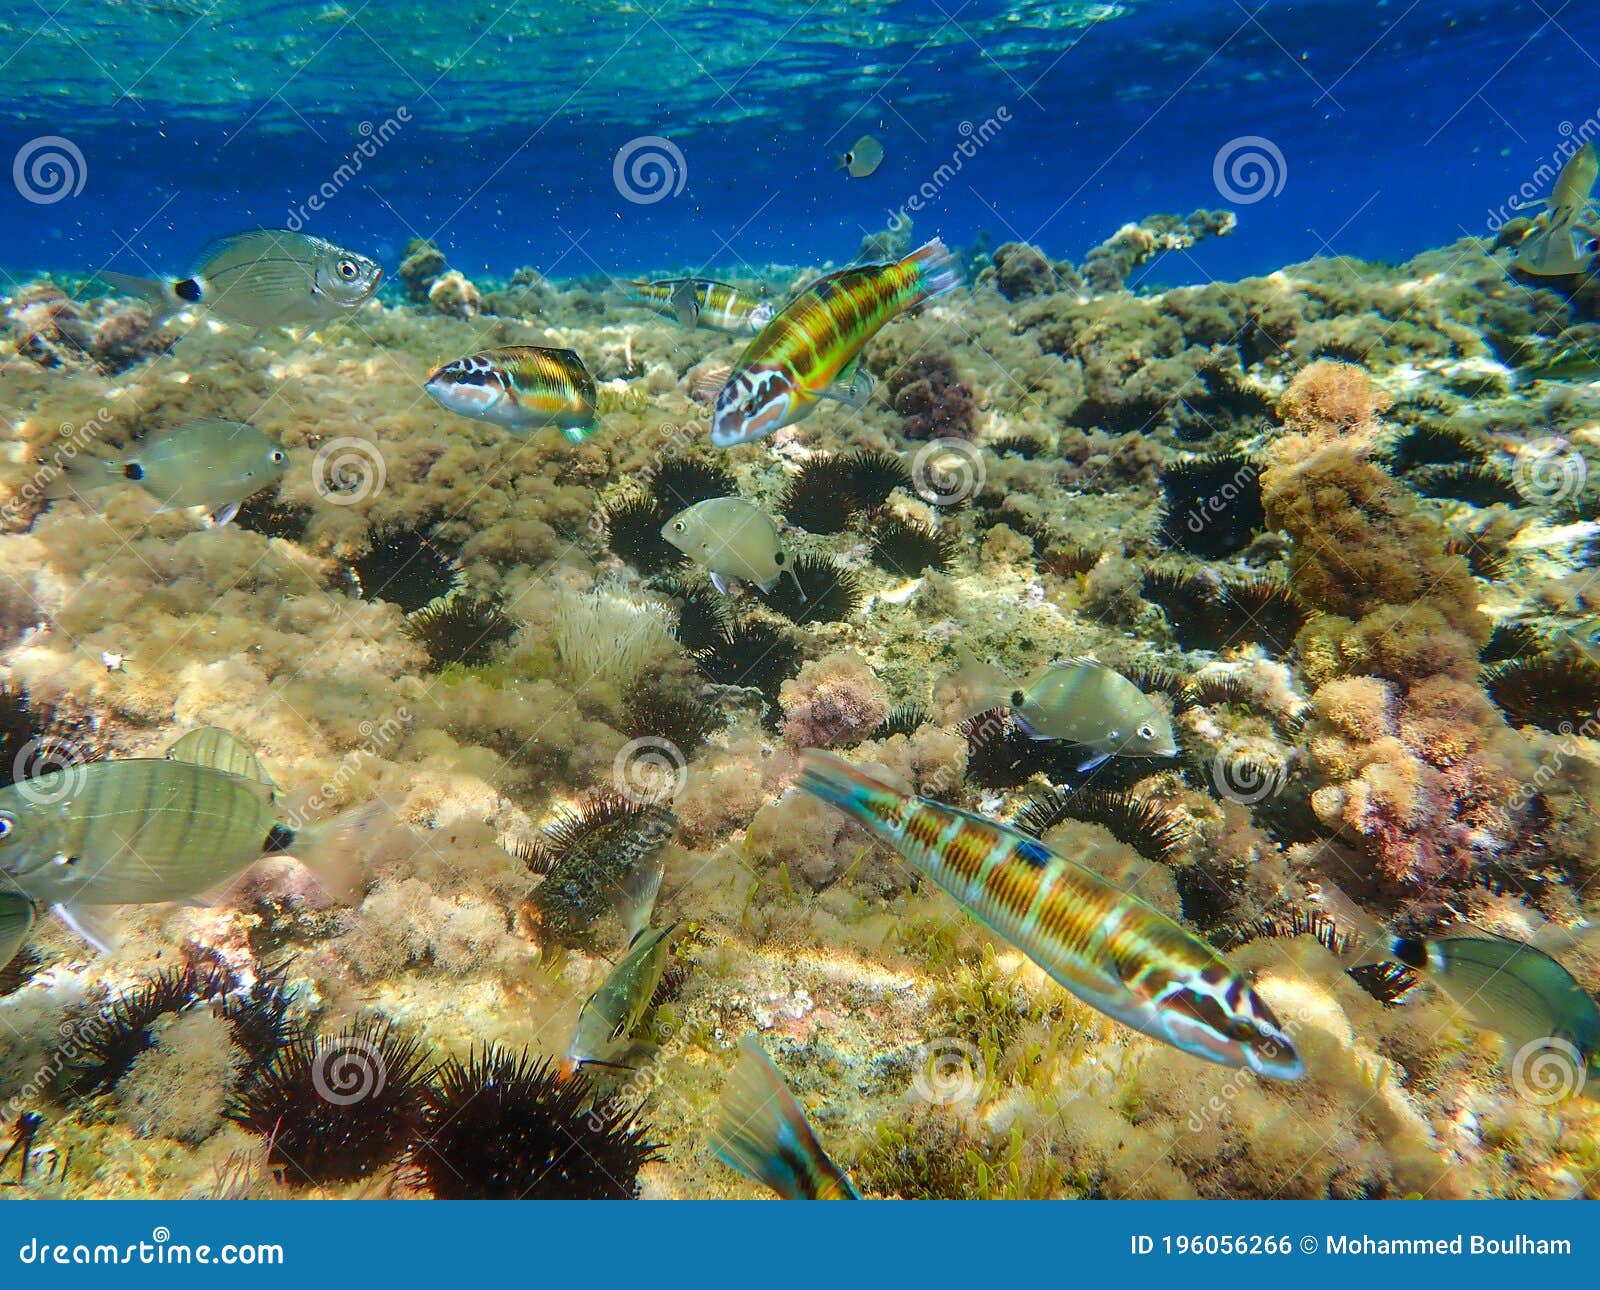 Varied Underwater Fish In The Mediterranean Sea. Under The Sea